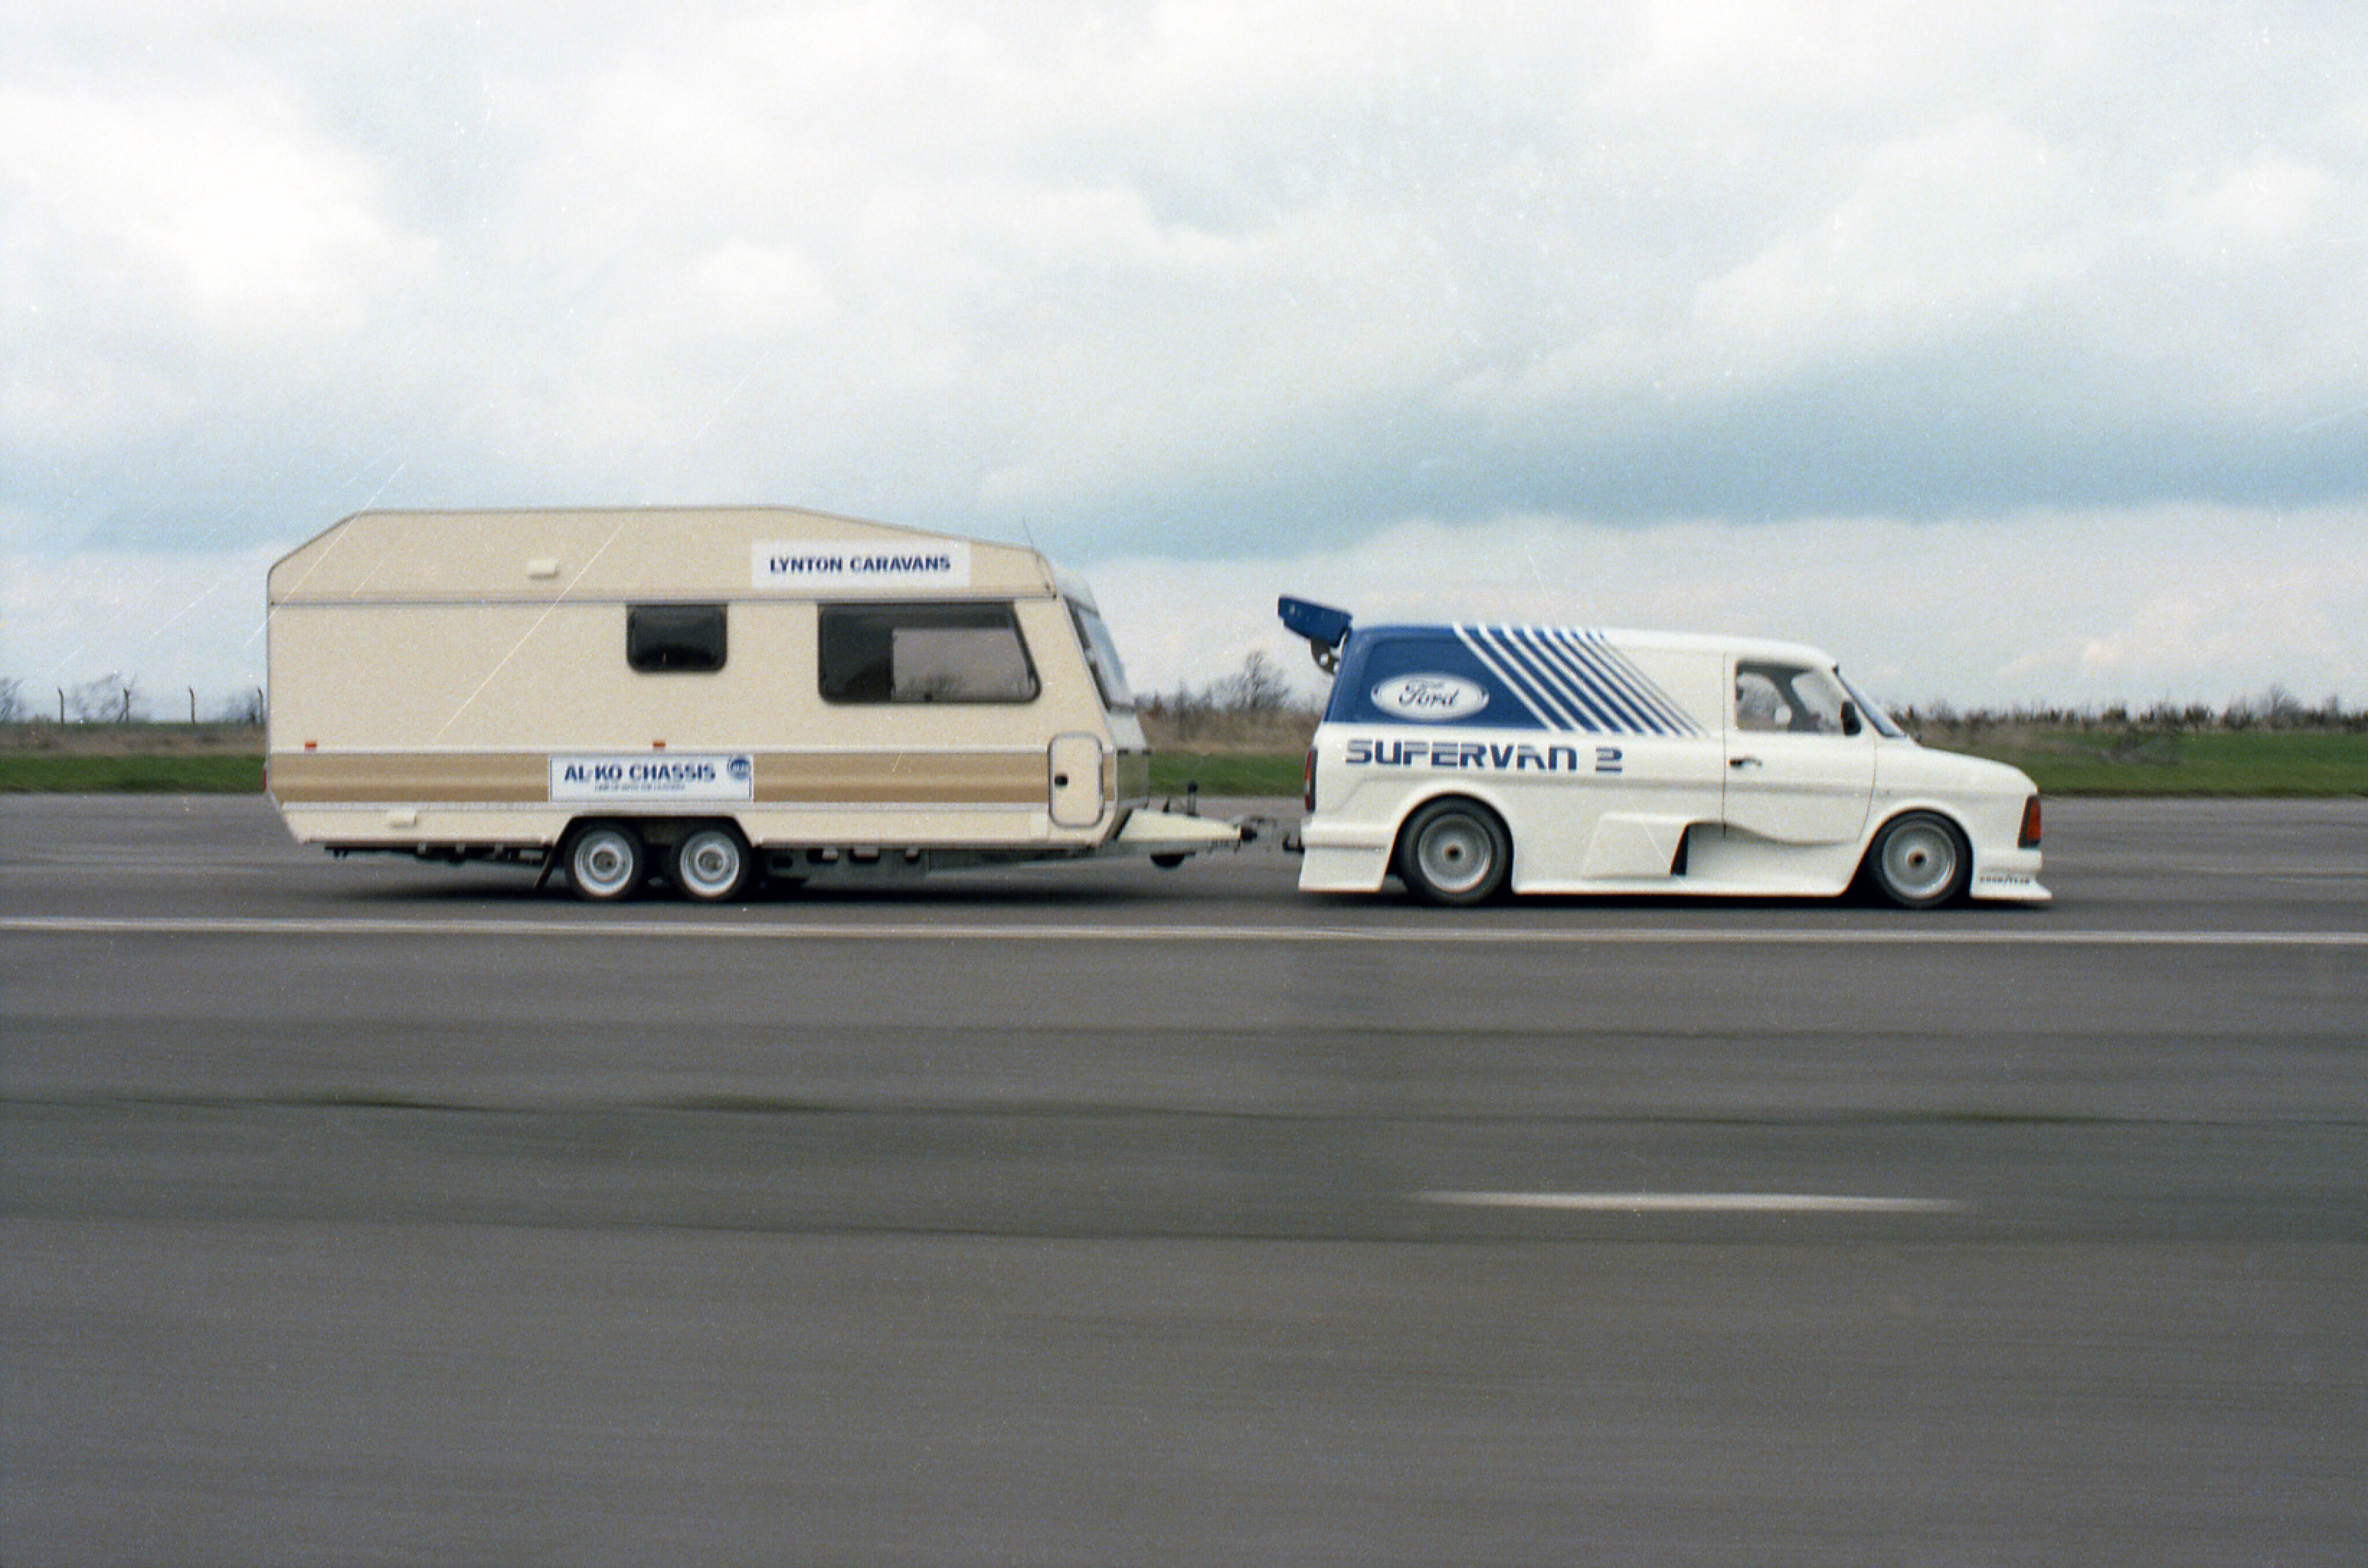 df1e27a3/1985 ford transit mark ii supervan 2 action shot towing caravan on track cn uk 1985 328 0016 jpg